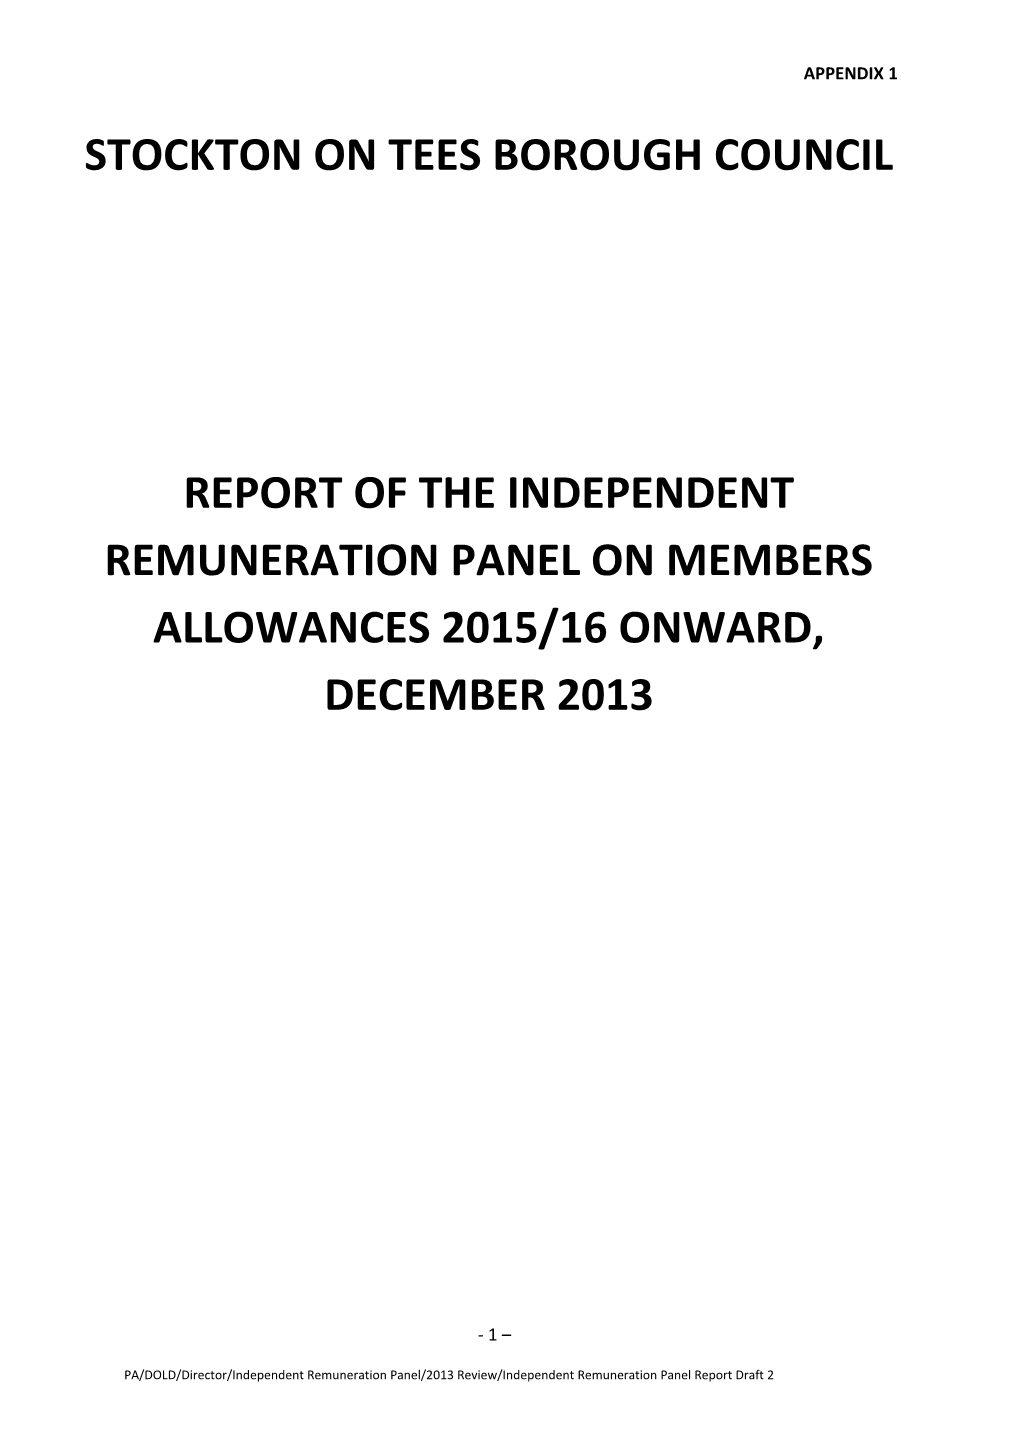 Independent Remuneration Panel Report Draft 1